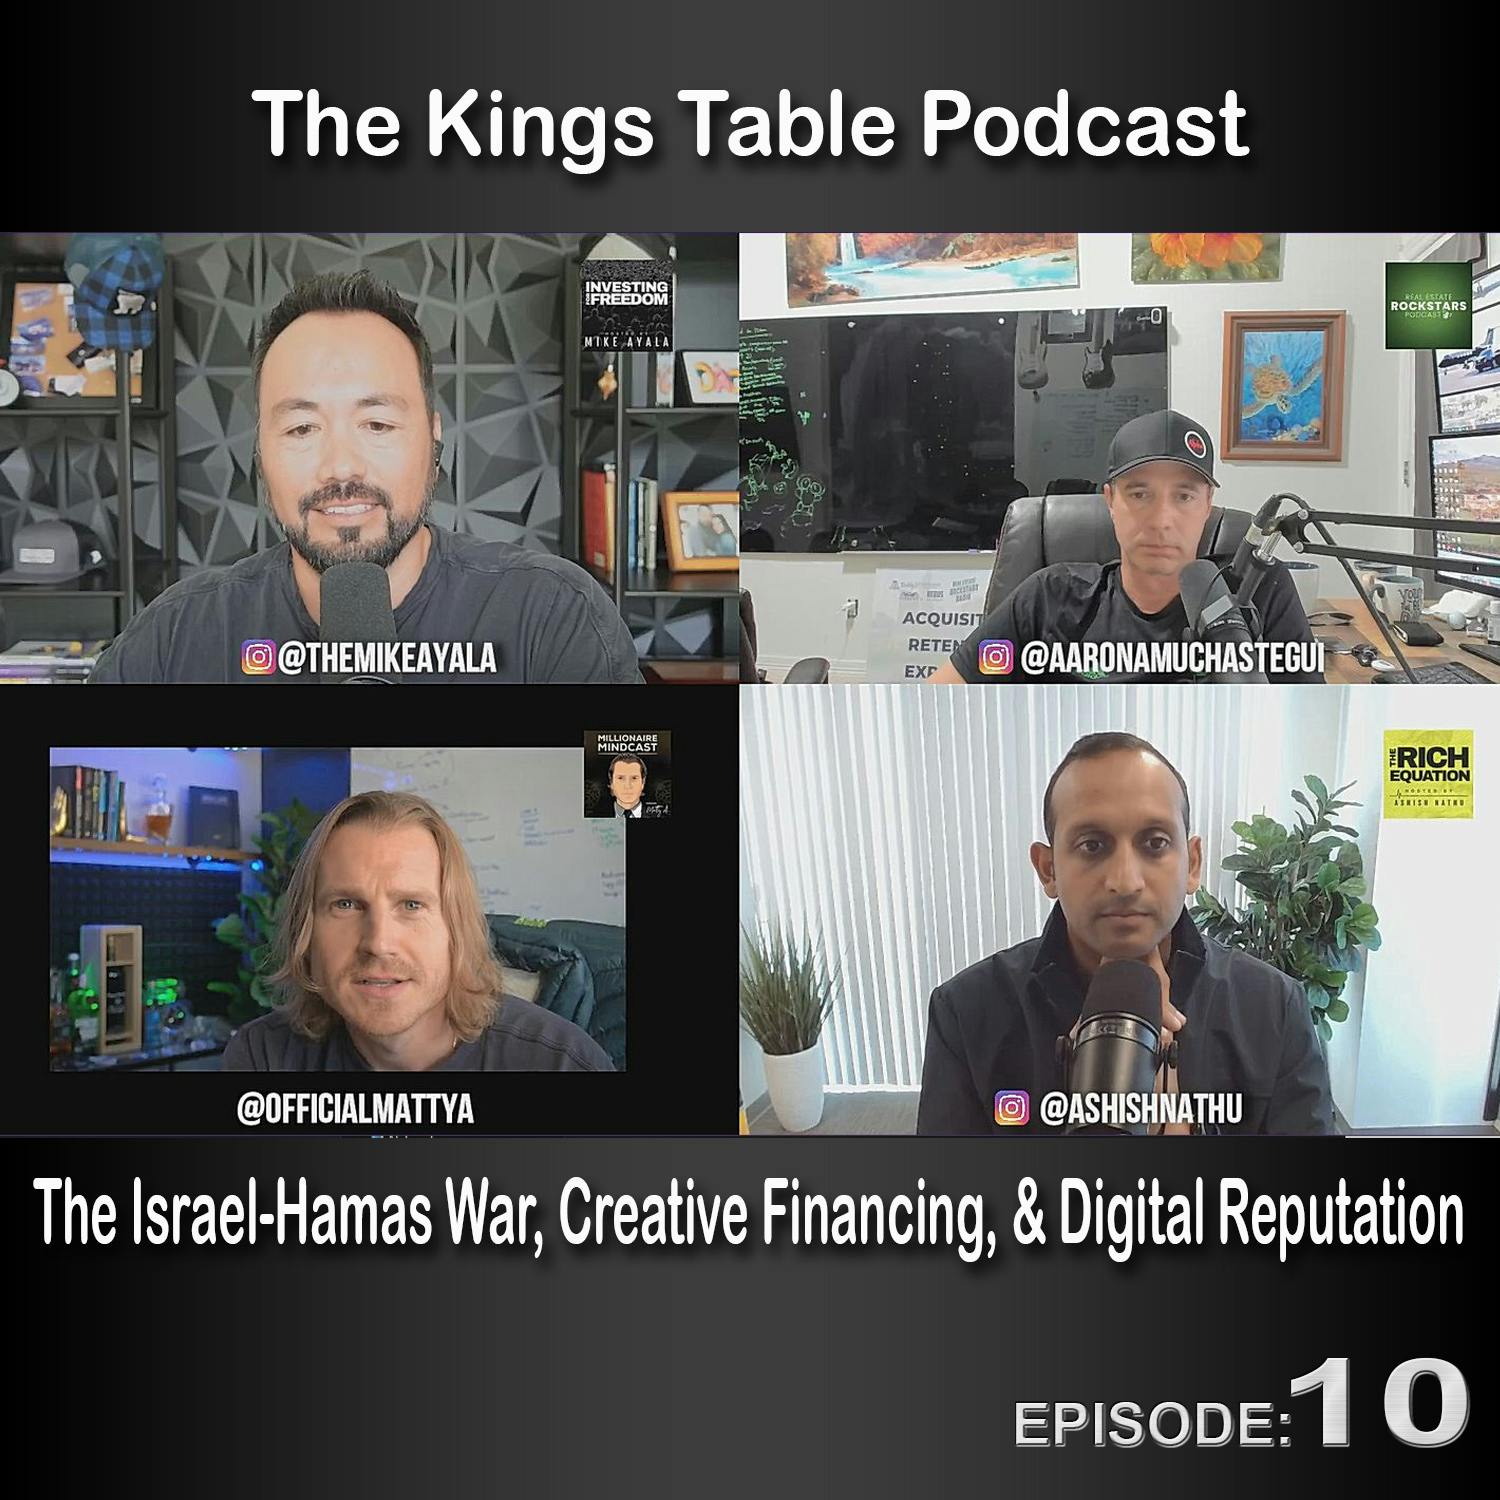 The Kings Table Episode 10 - The Israel-Hamas War, Creative Financing, & Digital Reputation